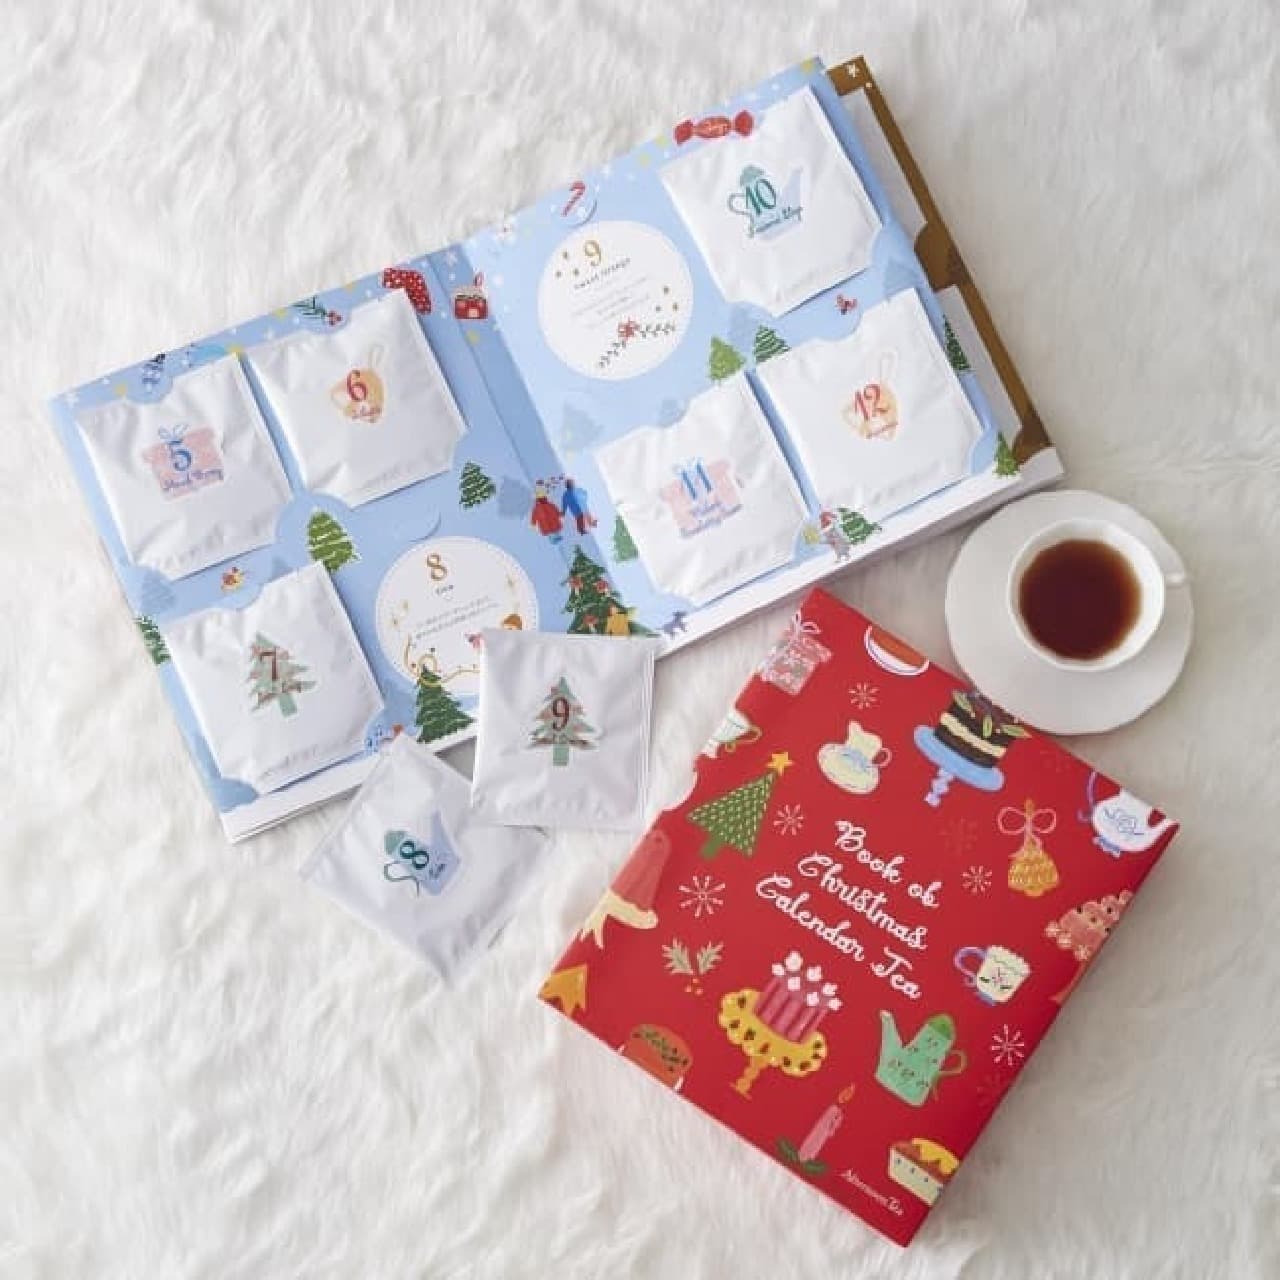 Afternoon Tea "Book of Christmas Calendar Tea"